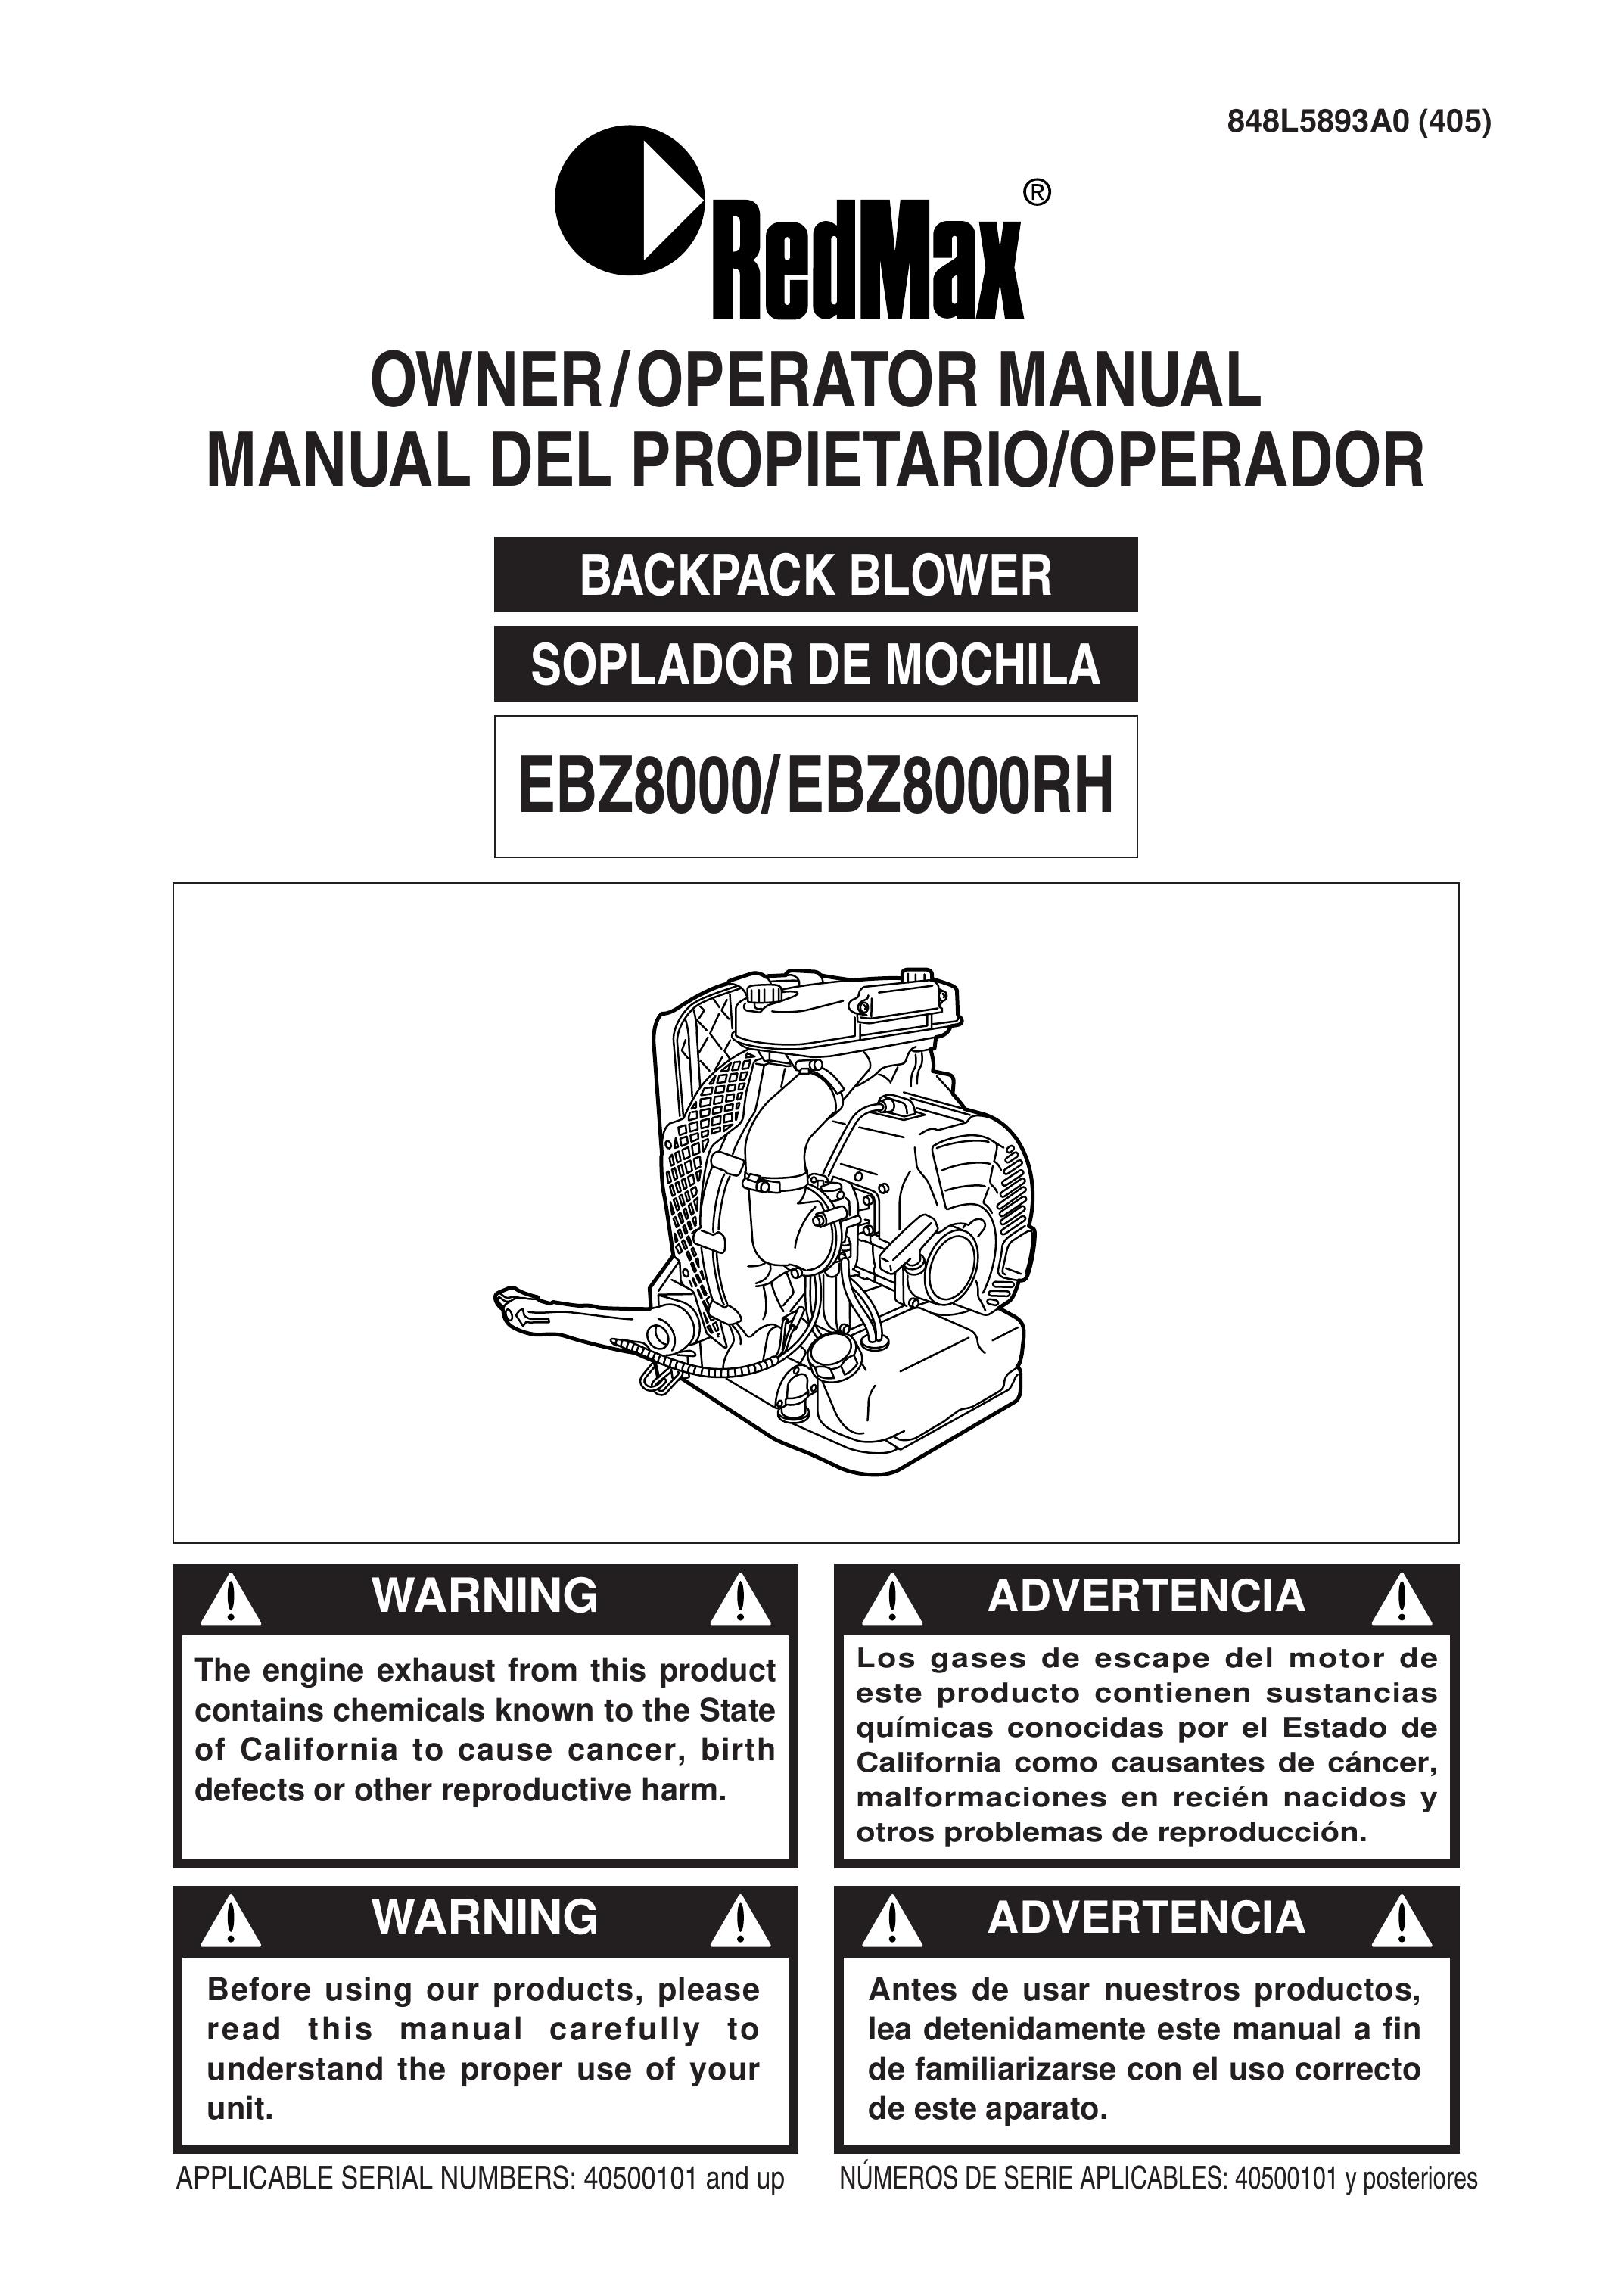 RedMax EBZ8000RH Blower User Manual